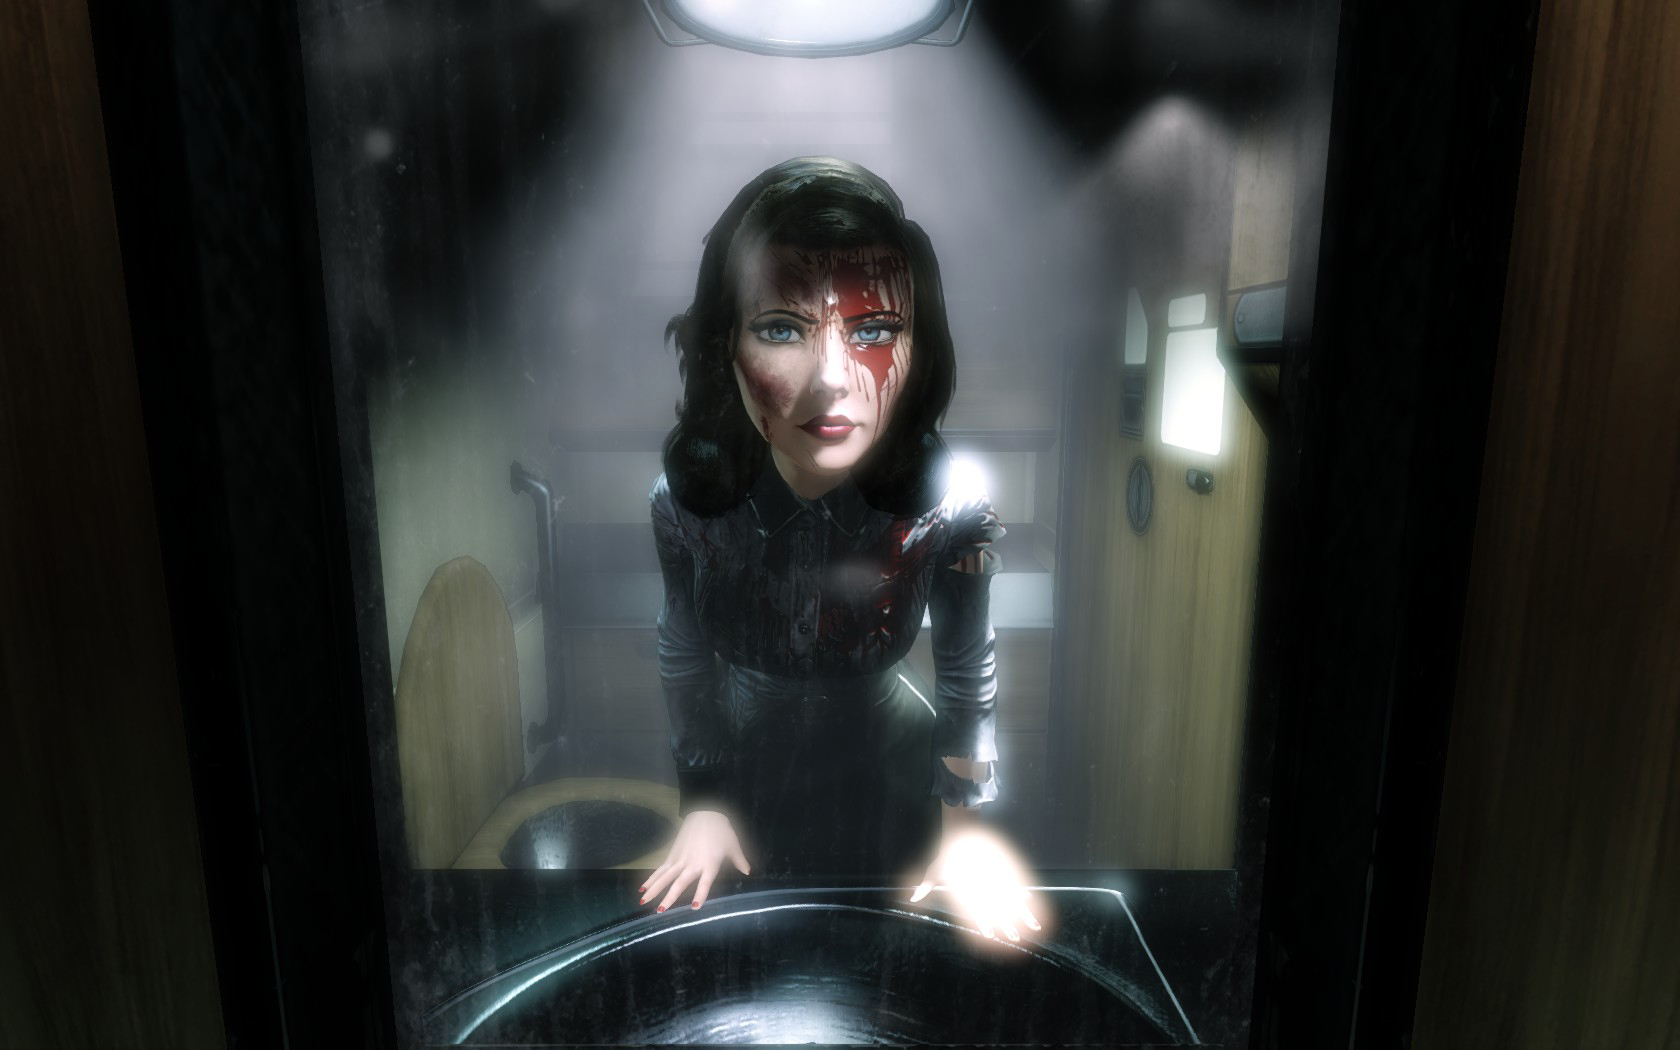 BioShock Infinite: Burial at Sea (PC) retrospective